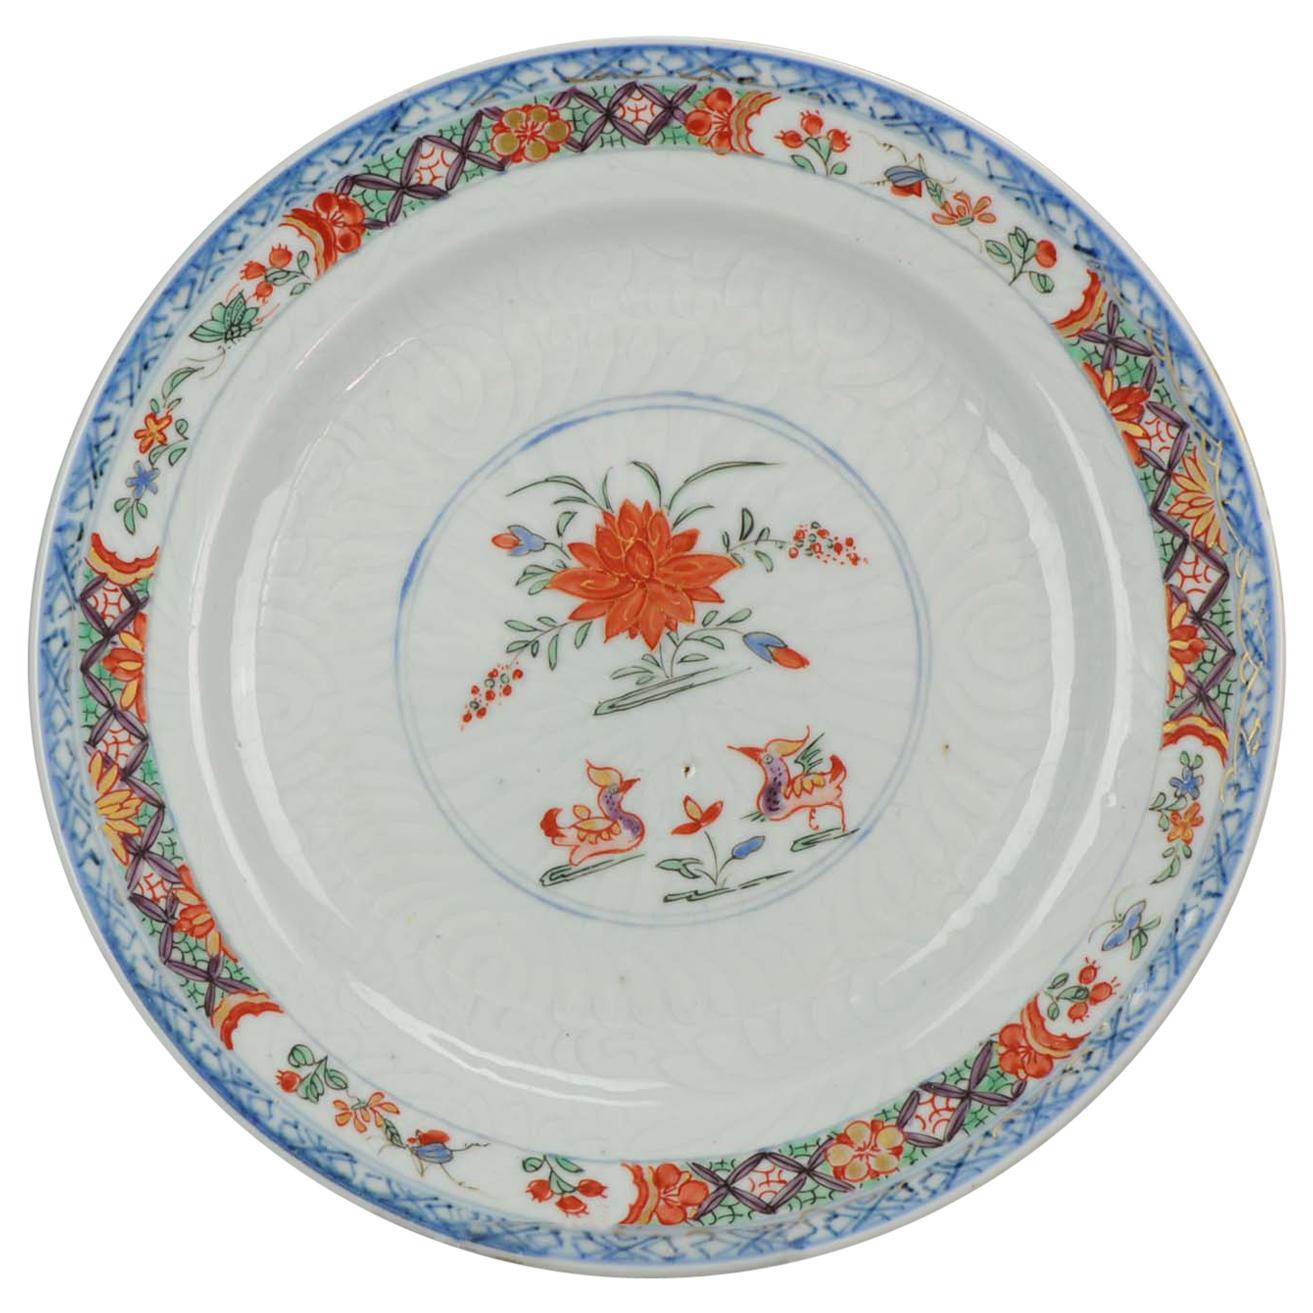 Antique Rare Famille Verte 18th Century Chinese Porcelain Plate